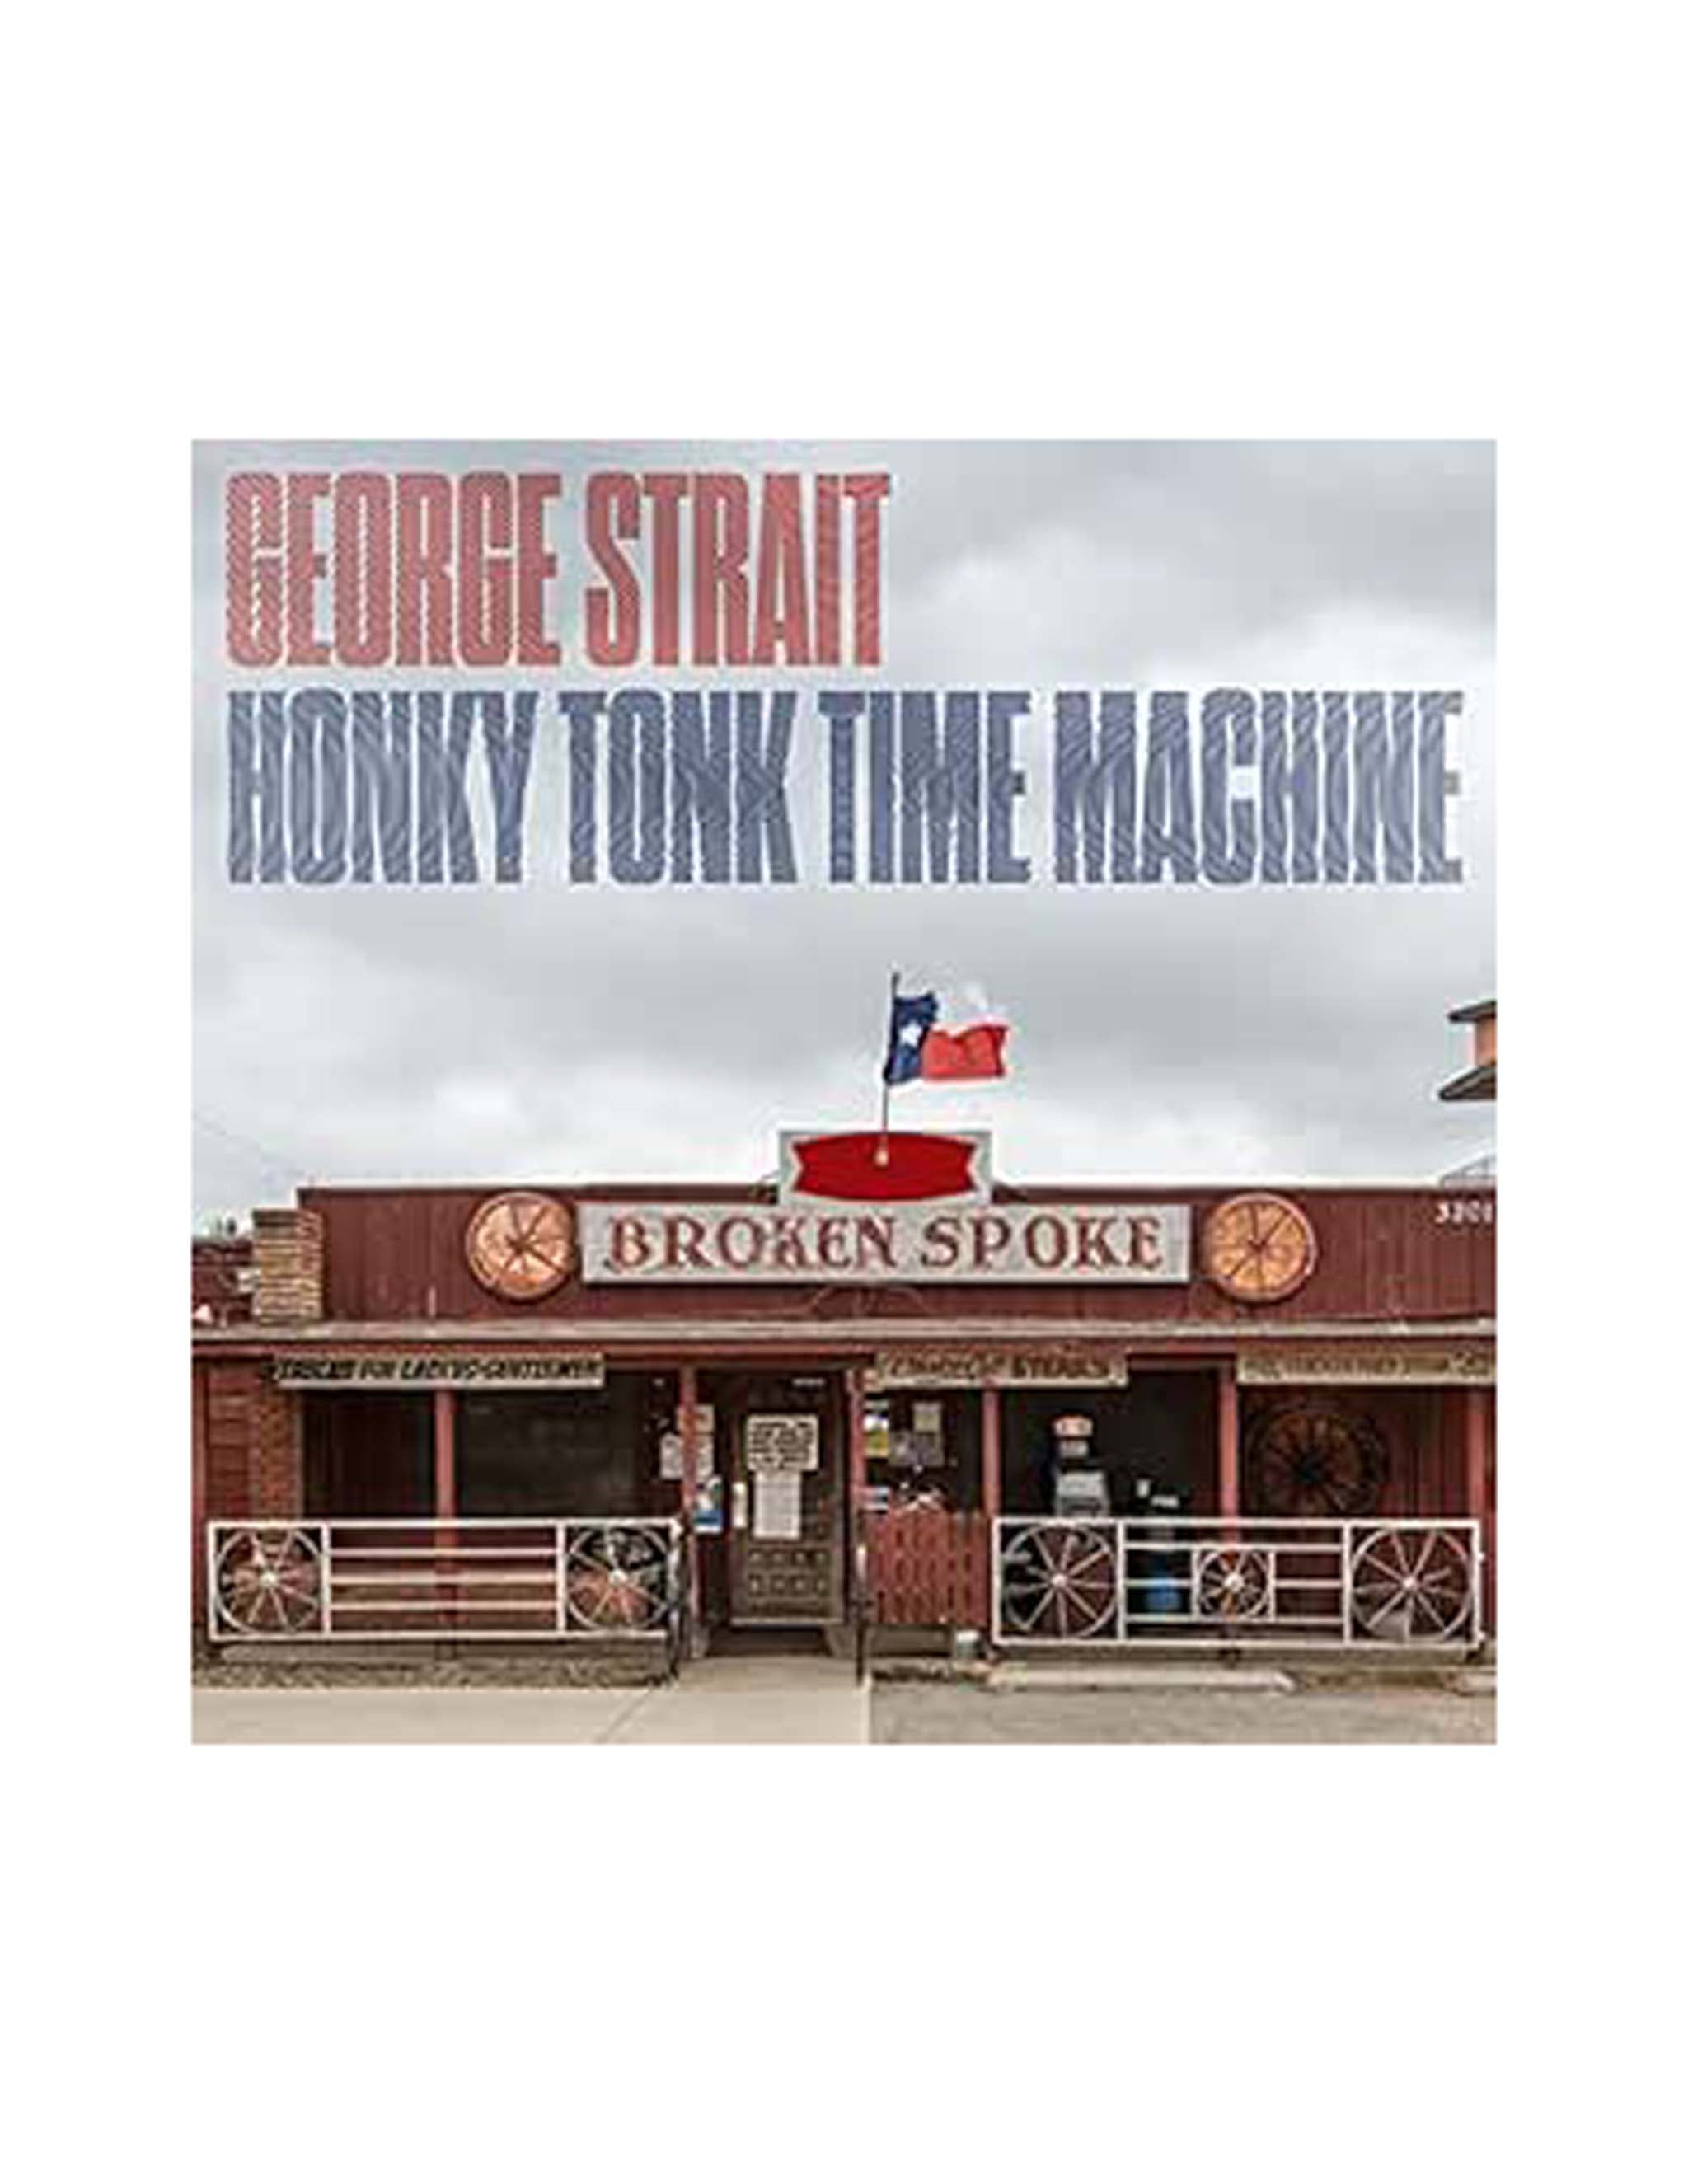 George Strait: Honky Tonk Time Machine (CD)